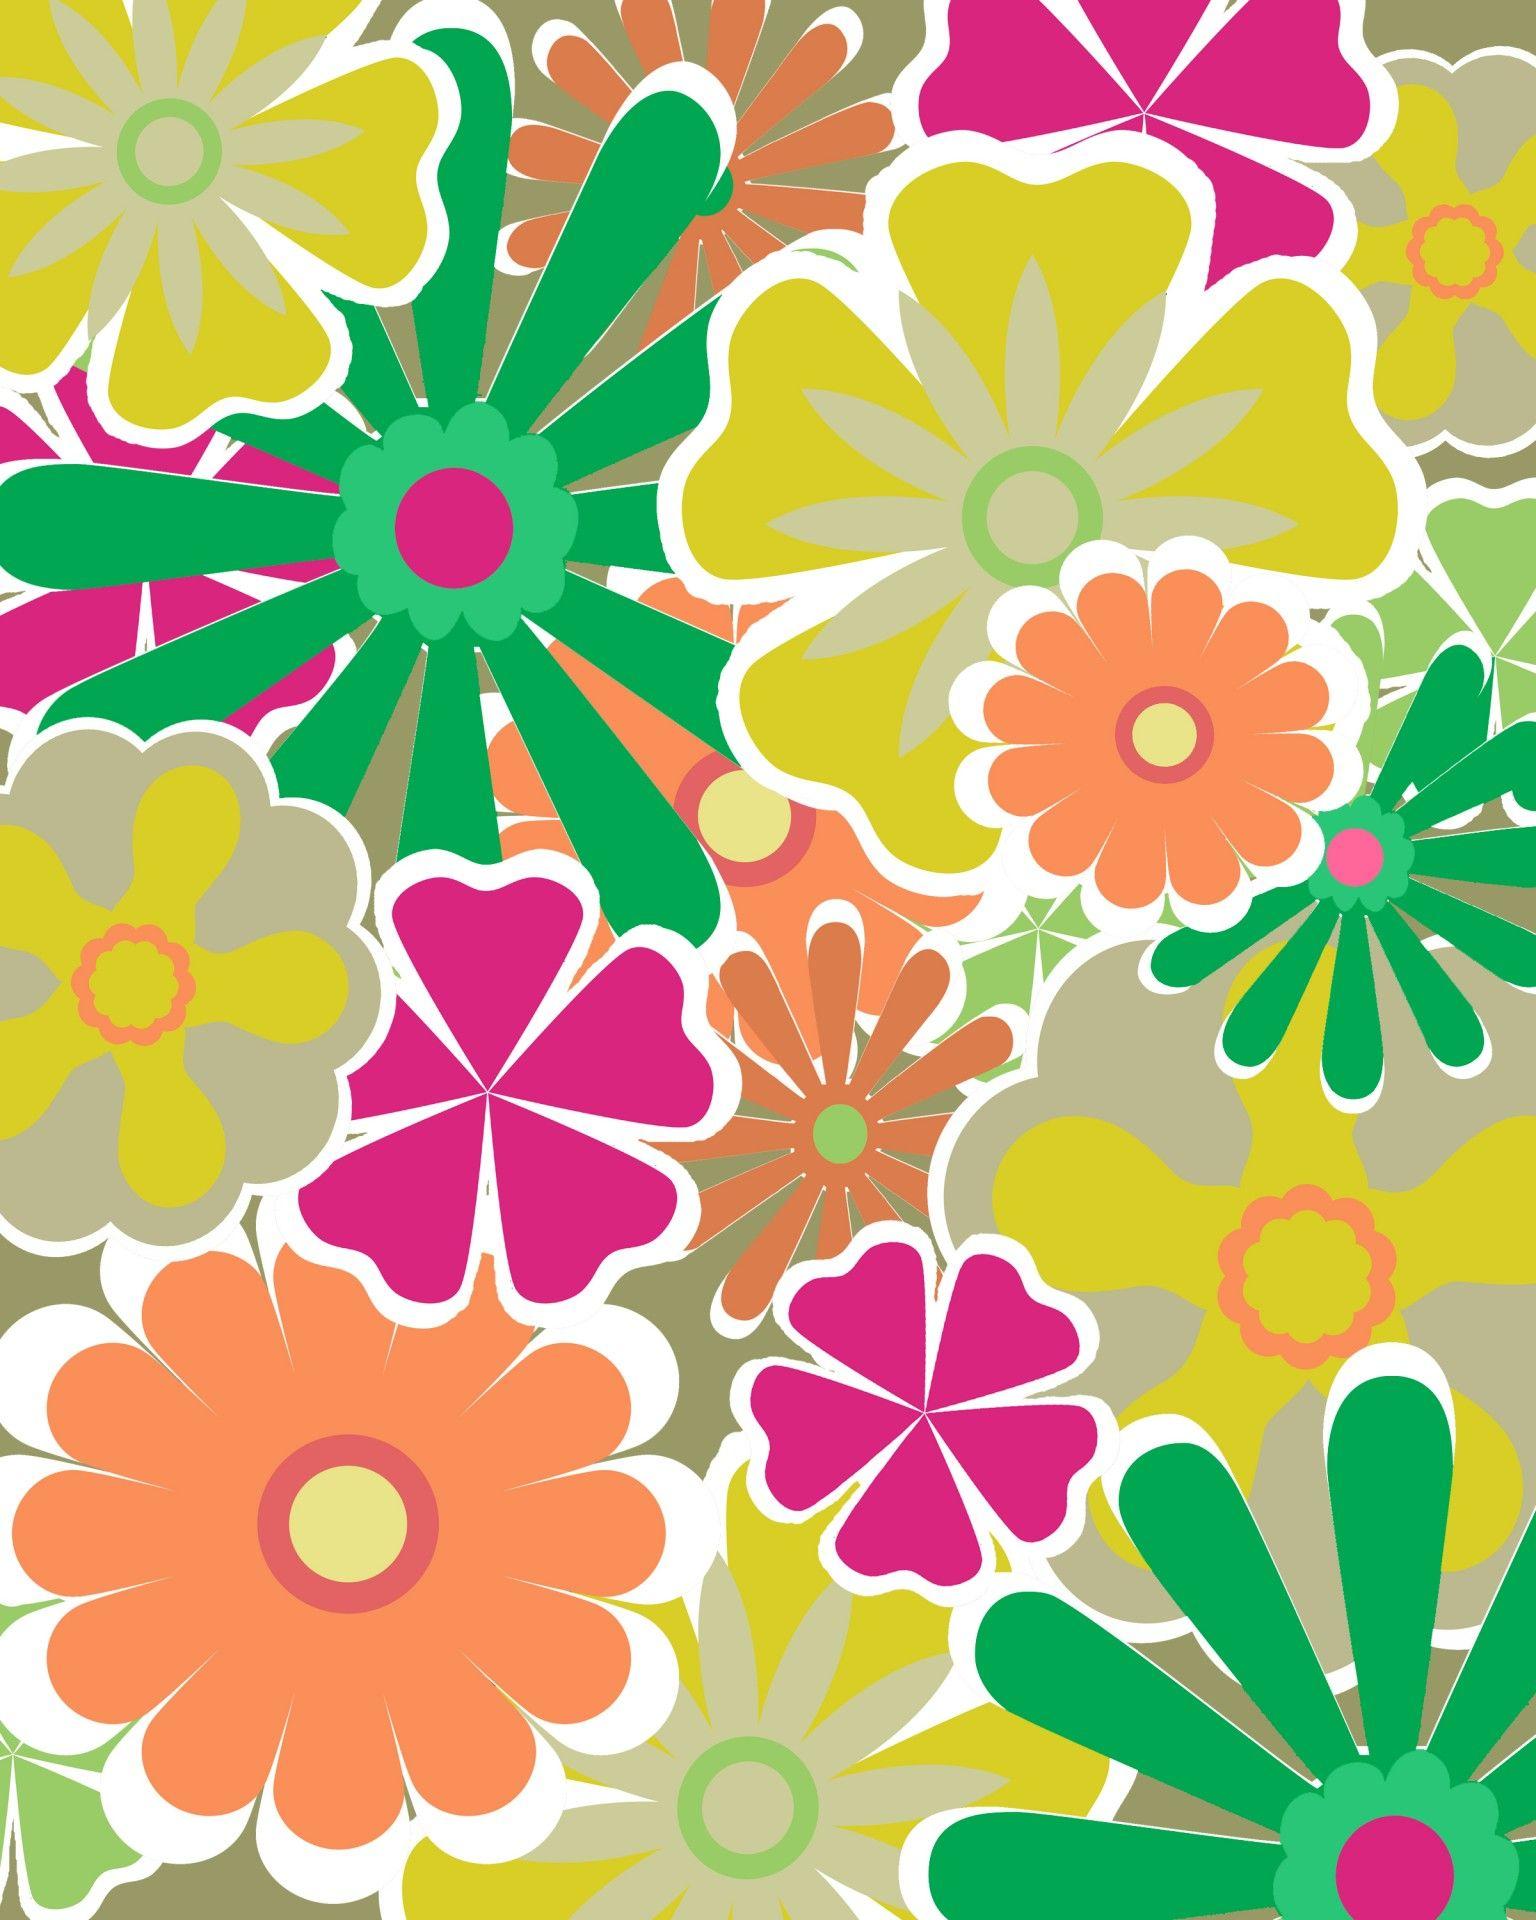 Flower Power Background. IPhone wallpaper. Background